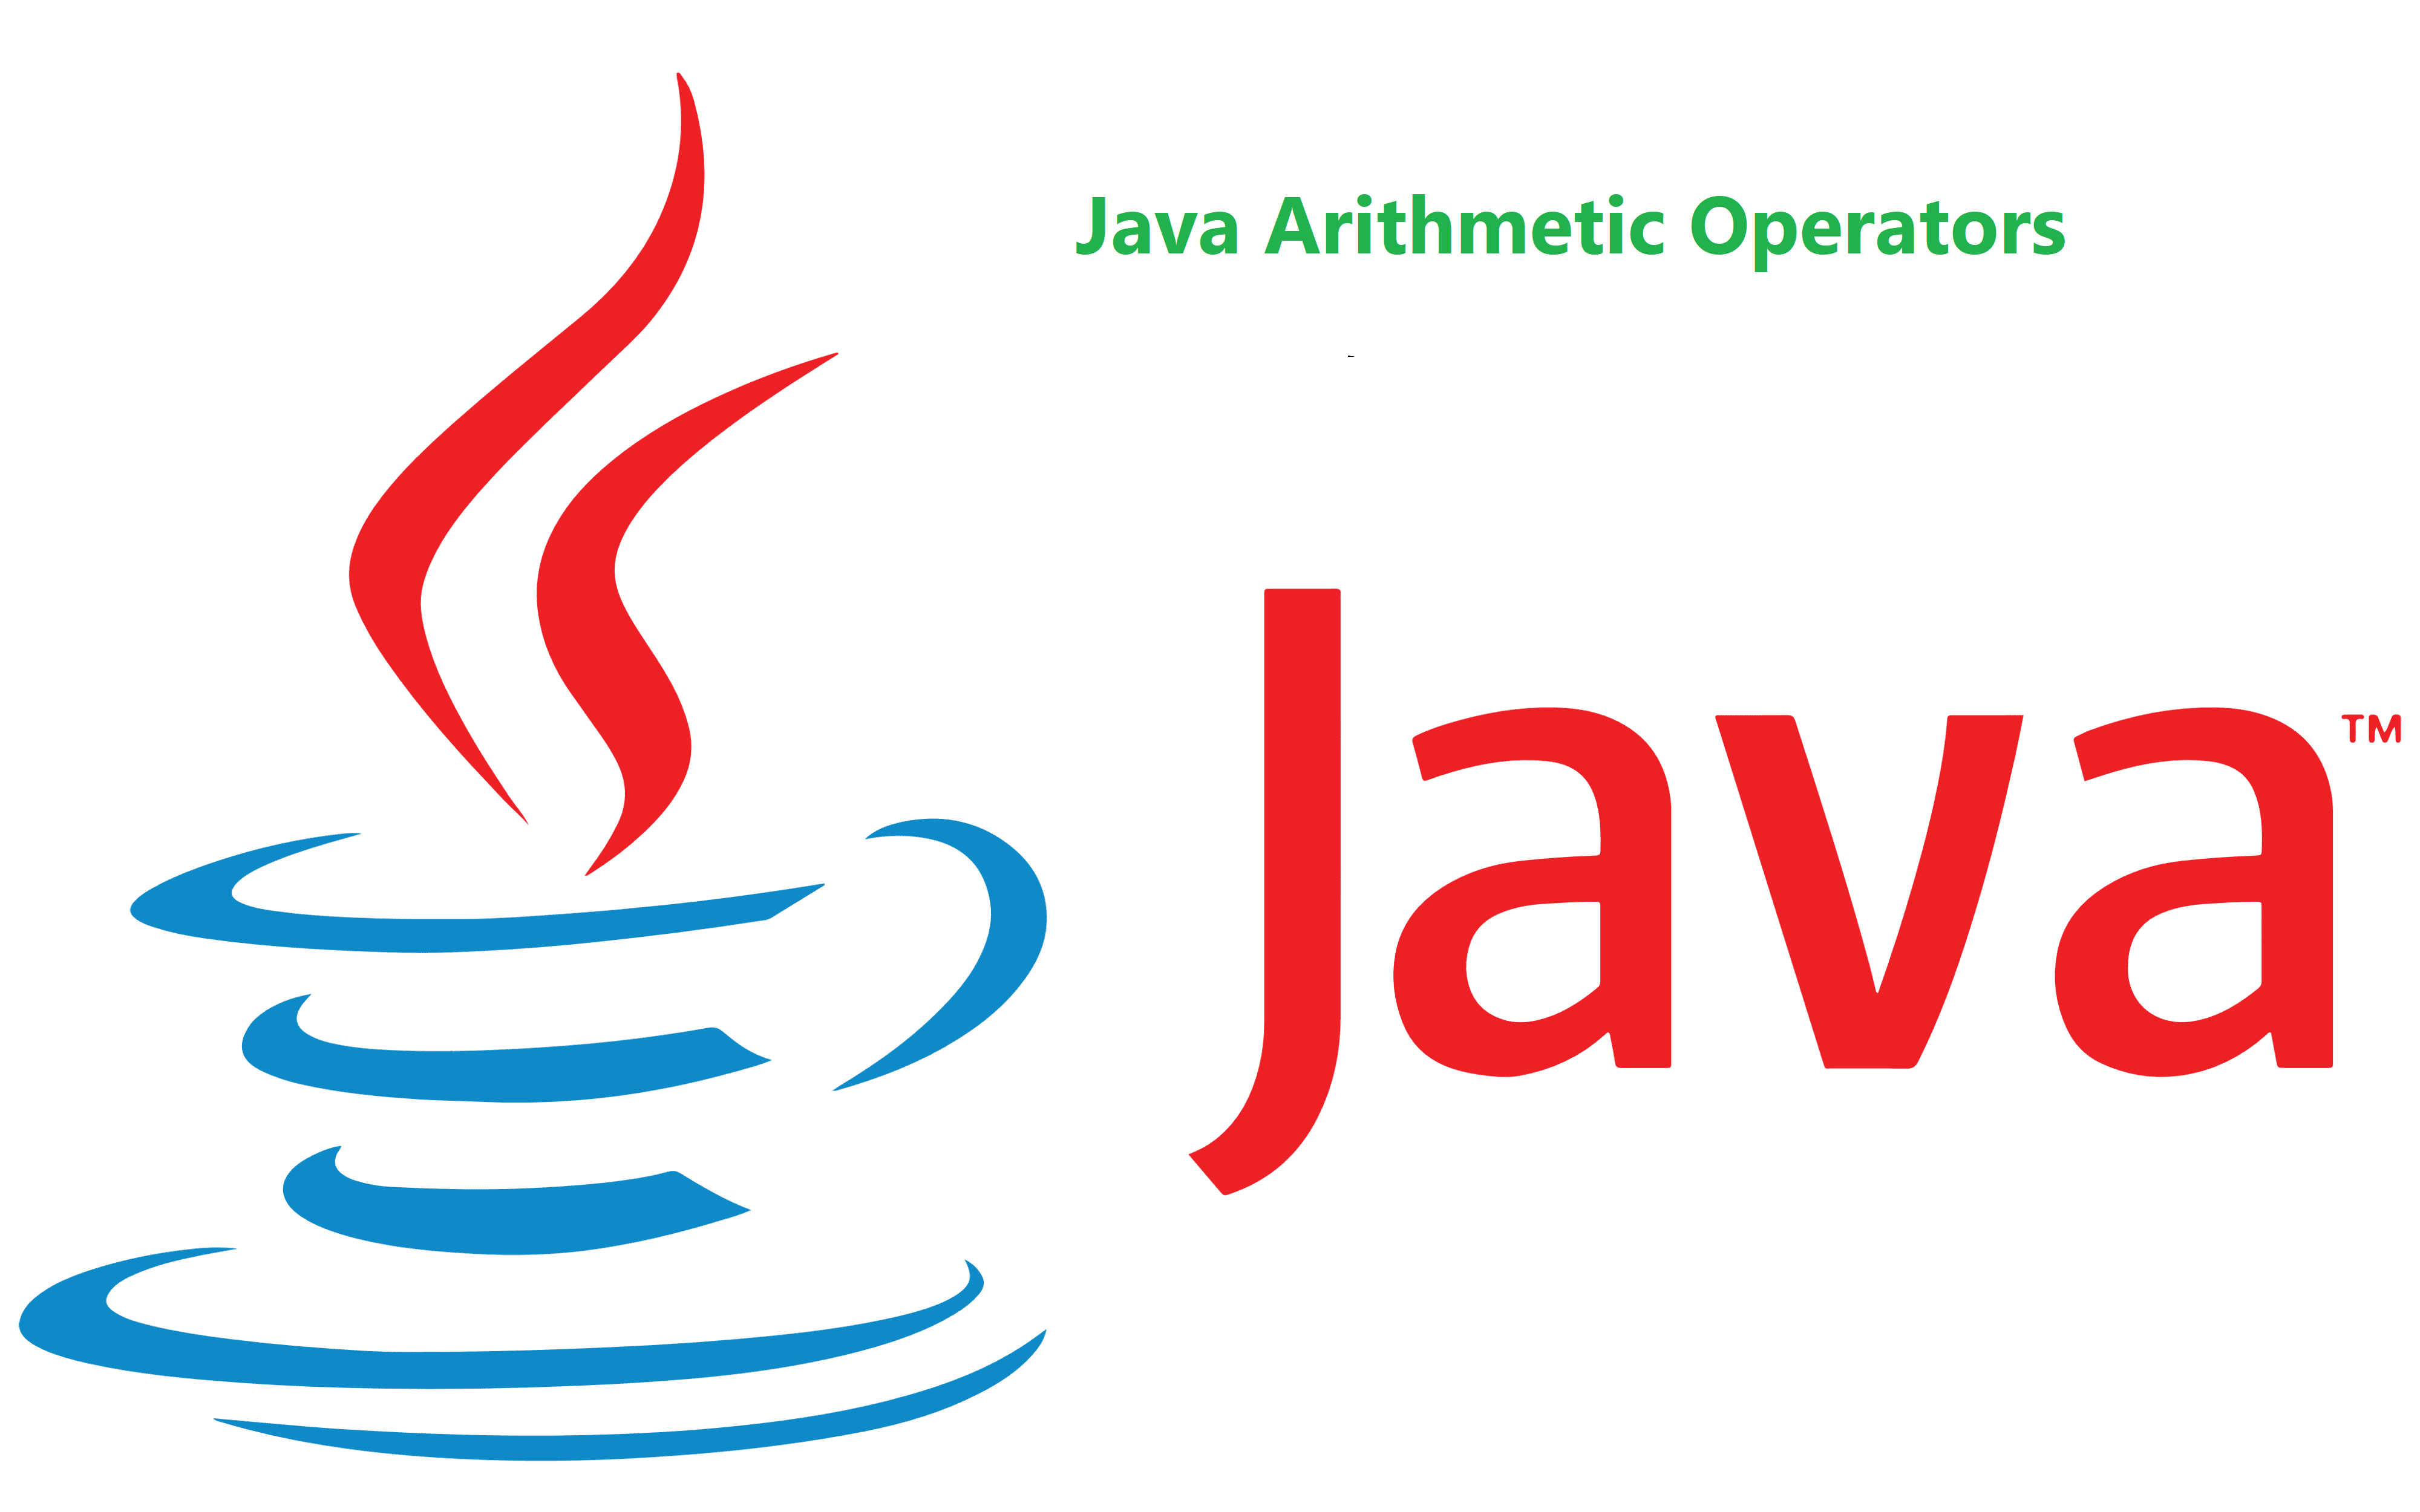 Arithmetic operators in java